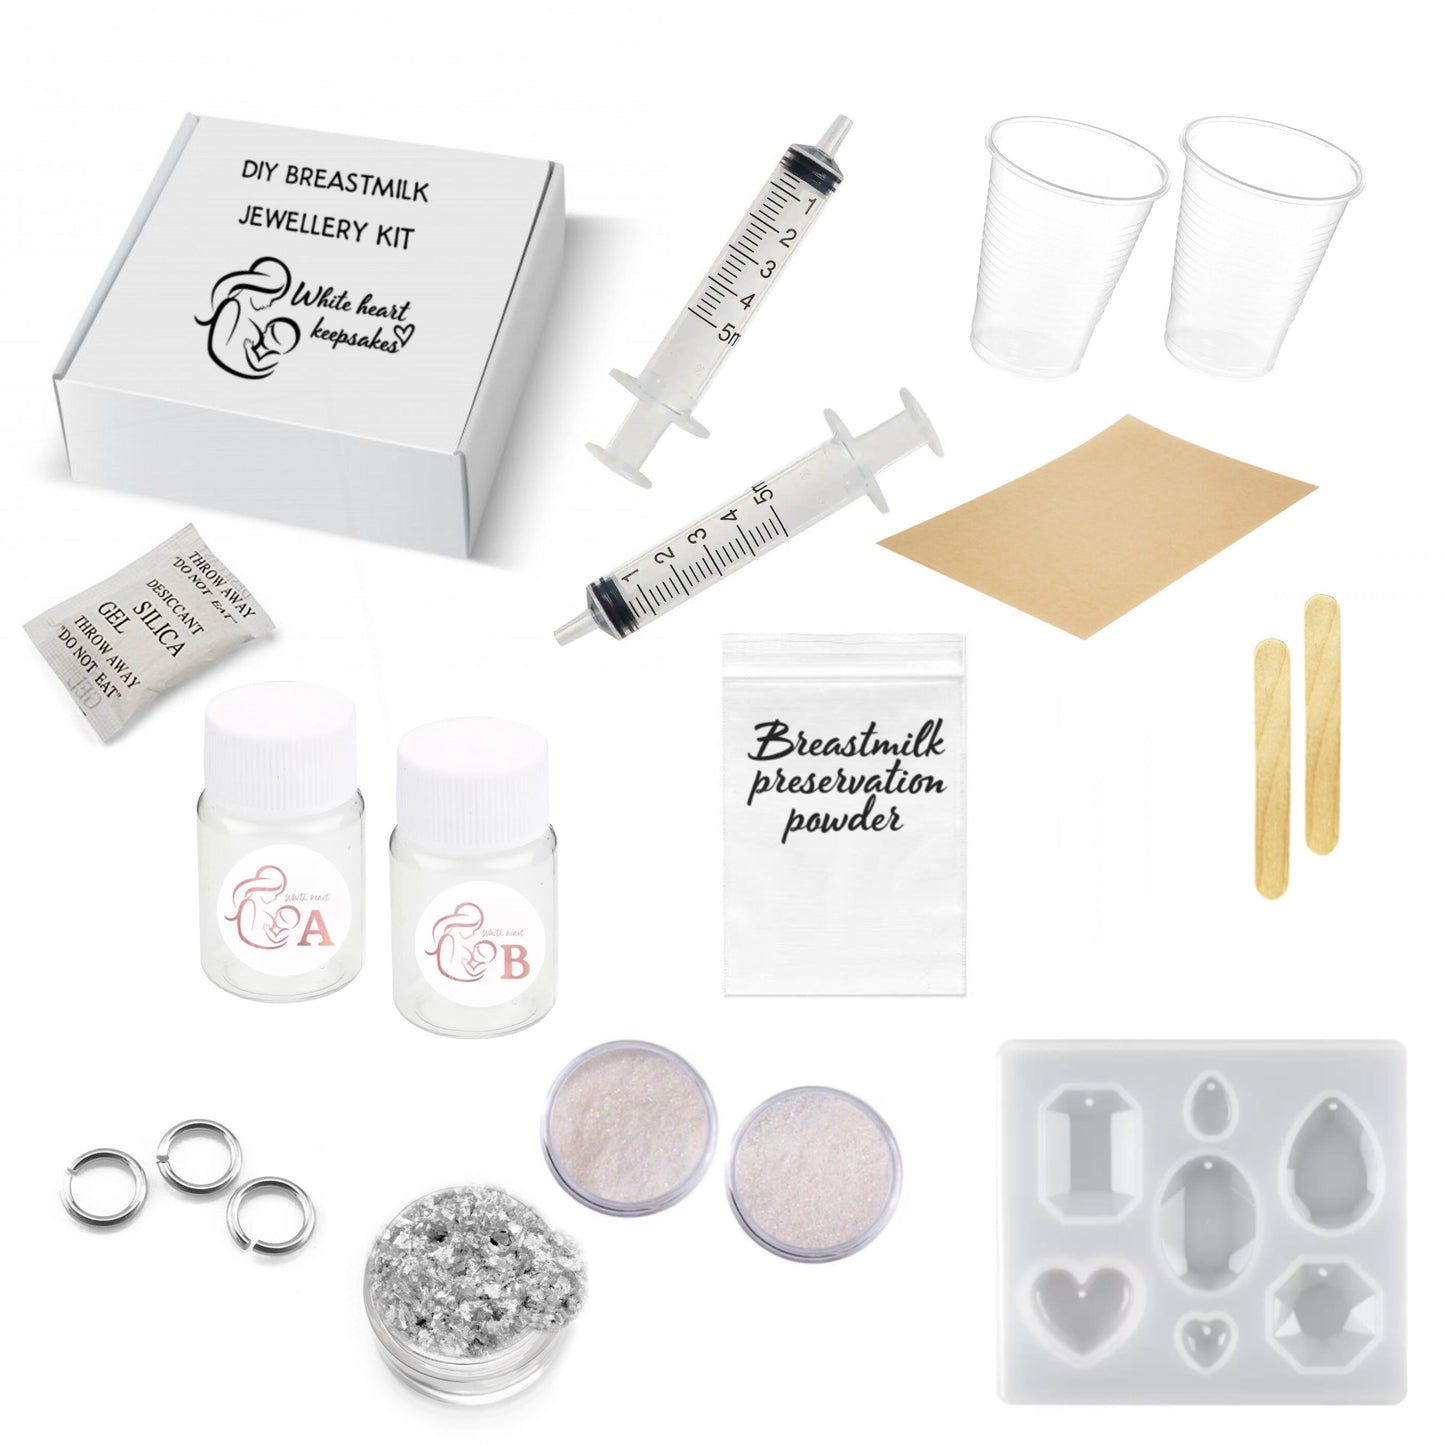 BreastmilkGems™ DIY kit with 2 Gratitude Bracelet set – Jewcells